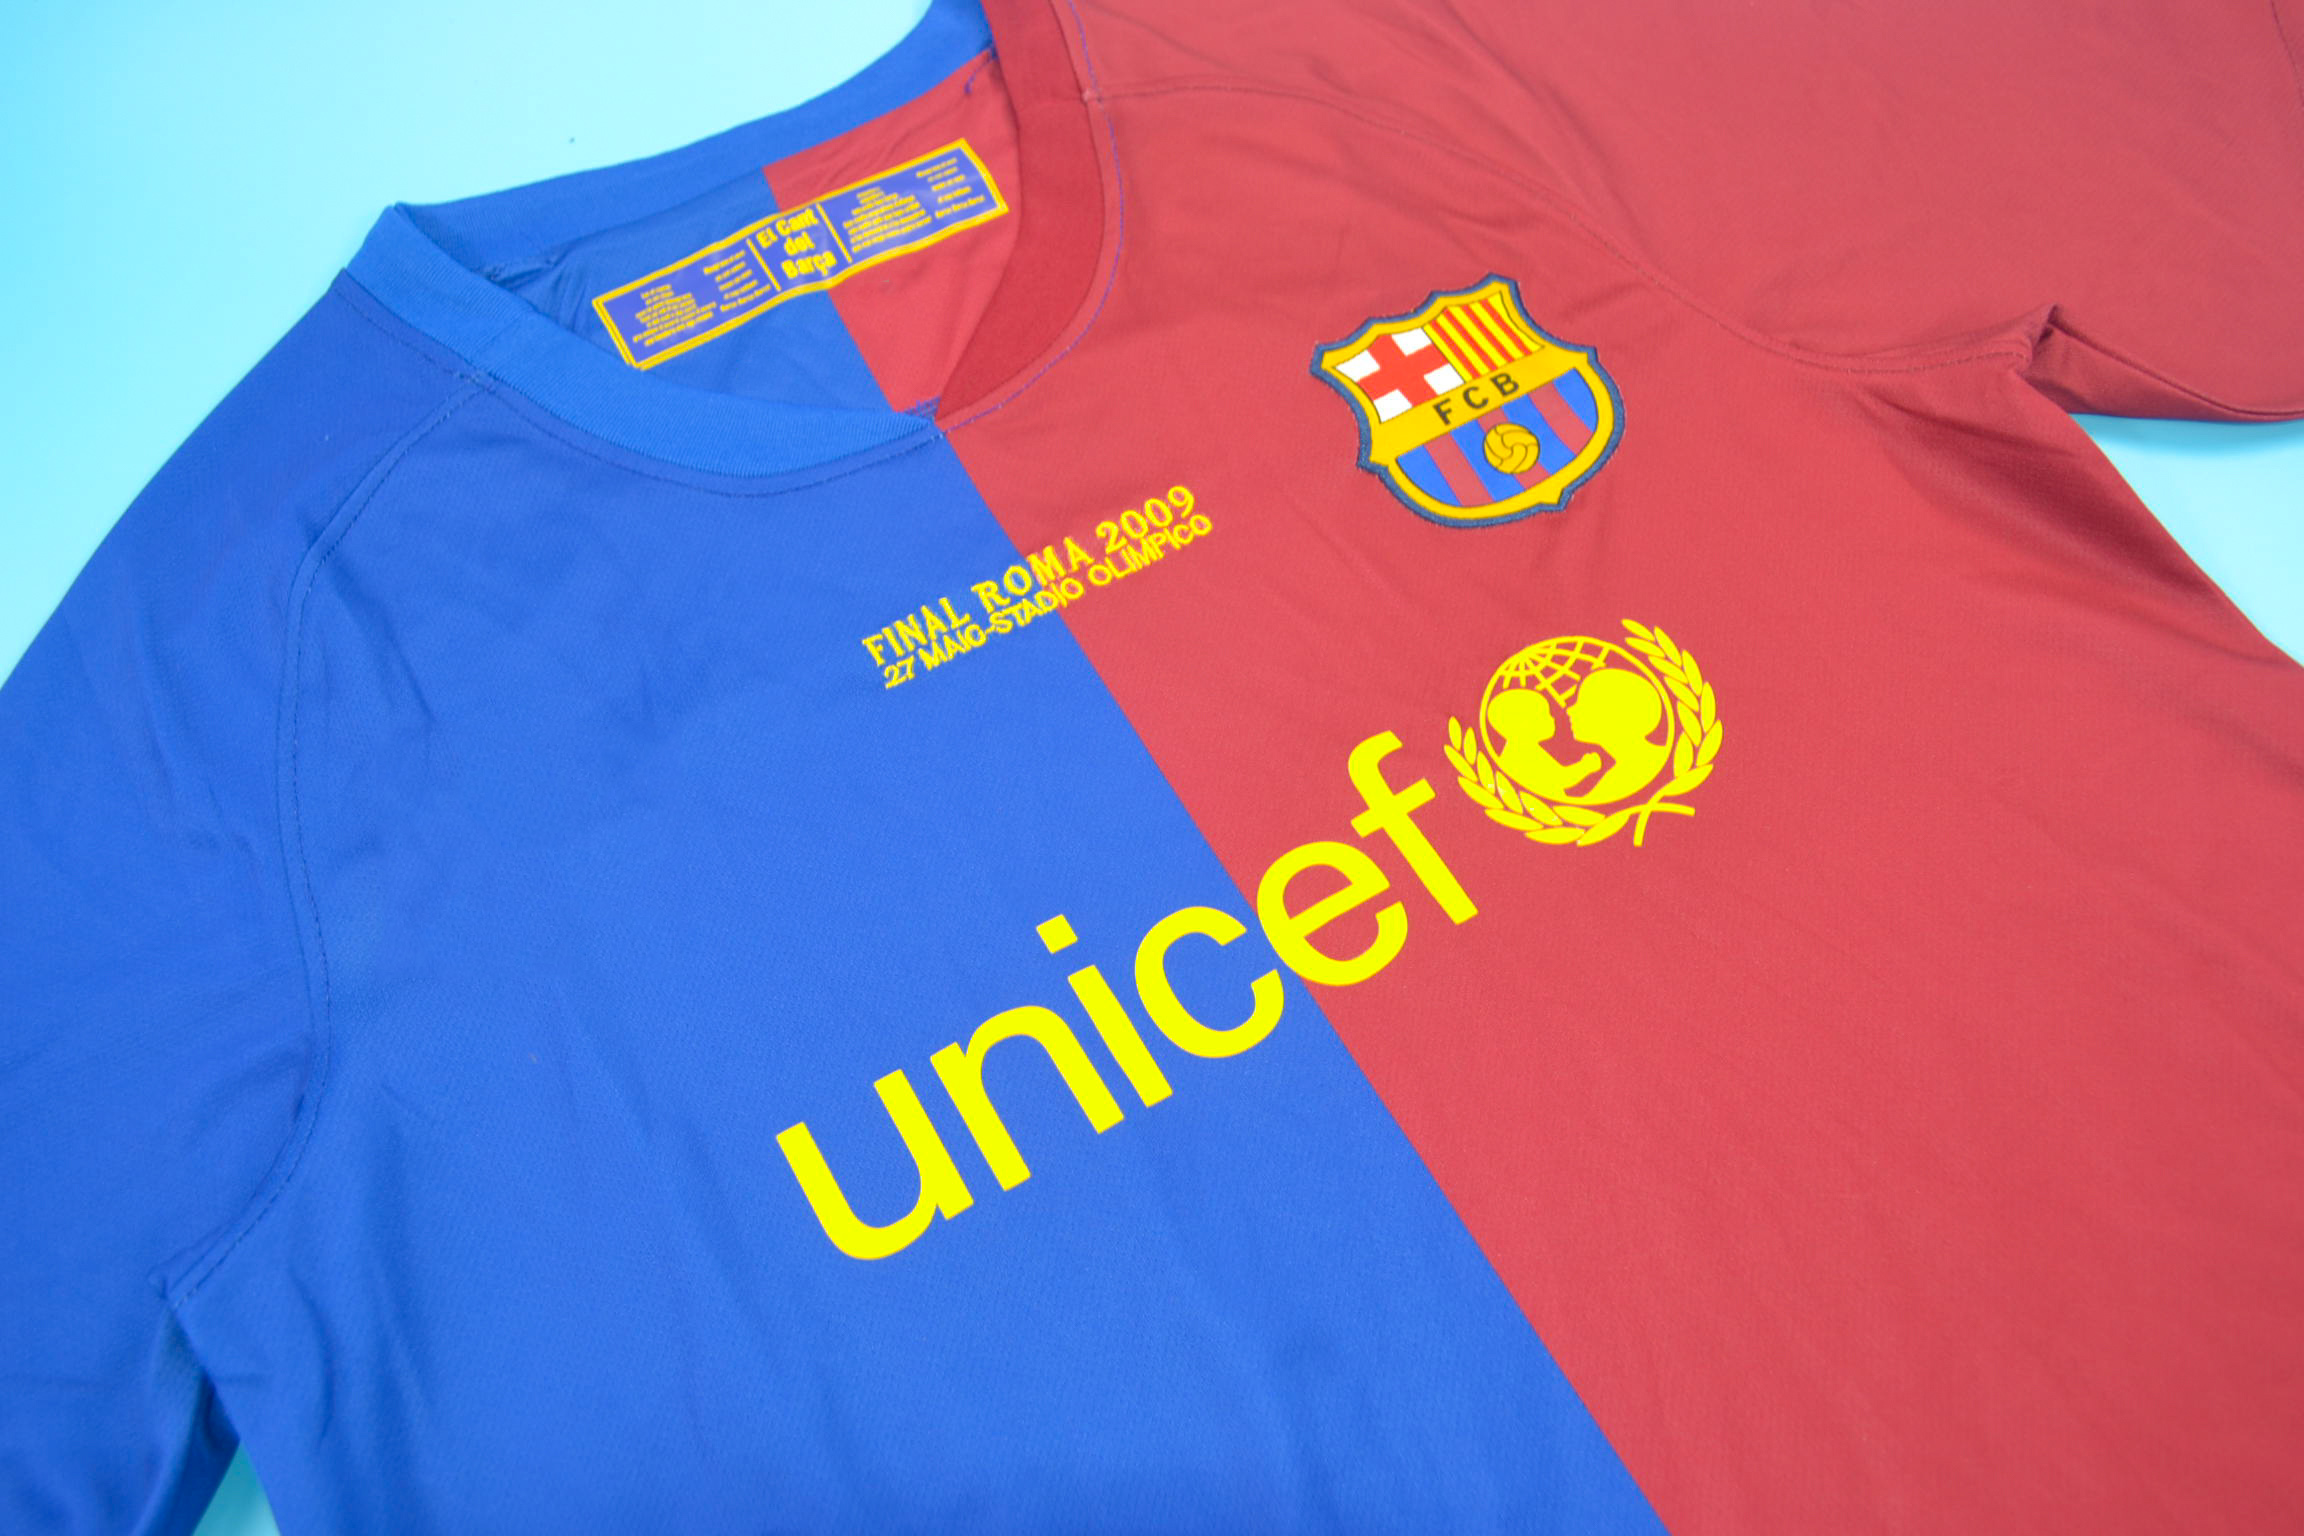 barcelona jersey 2008